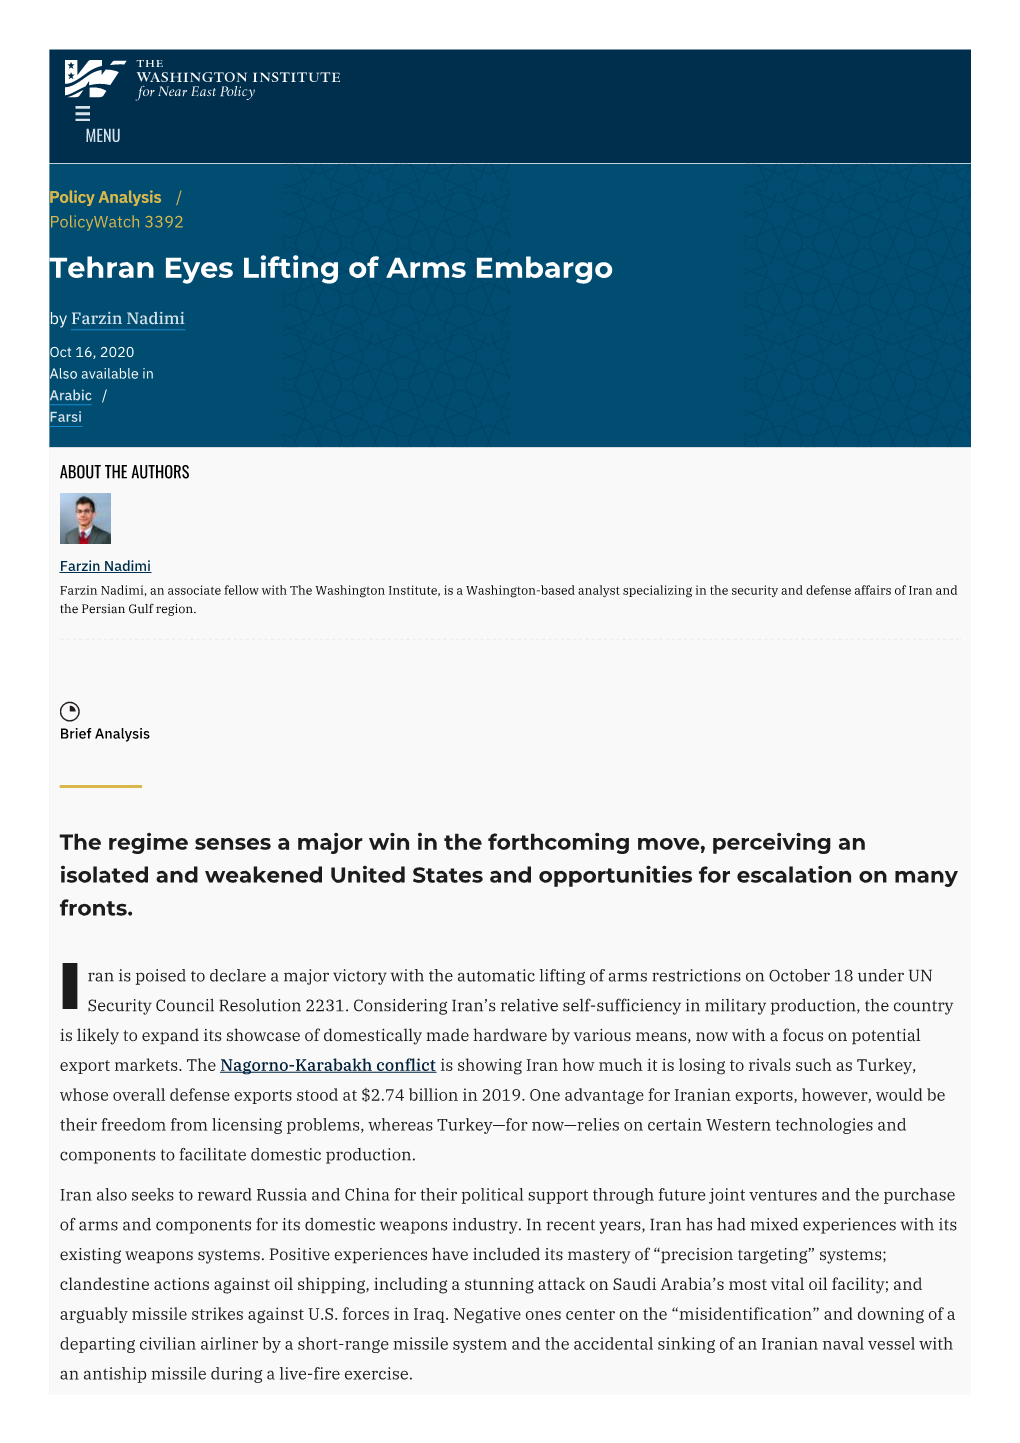 Tehran Eyes Lifting of Arms Embargo | the Washington Institute